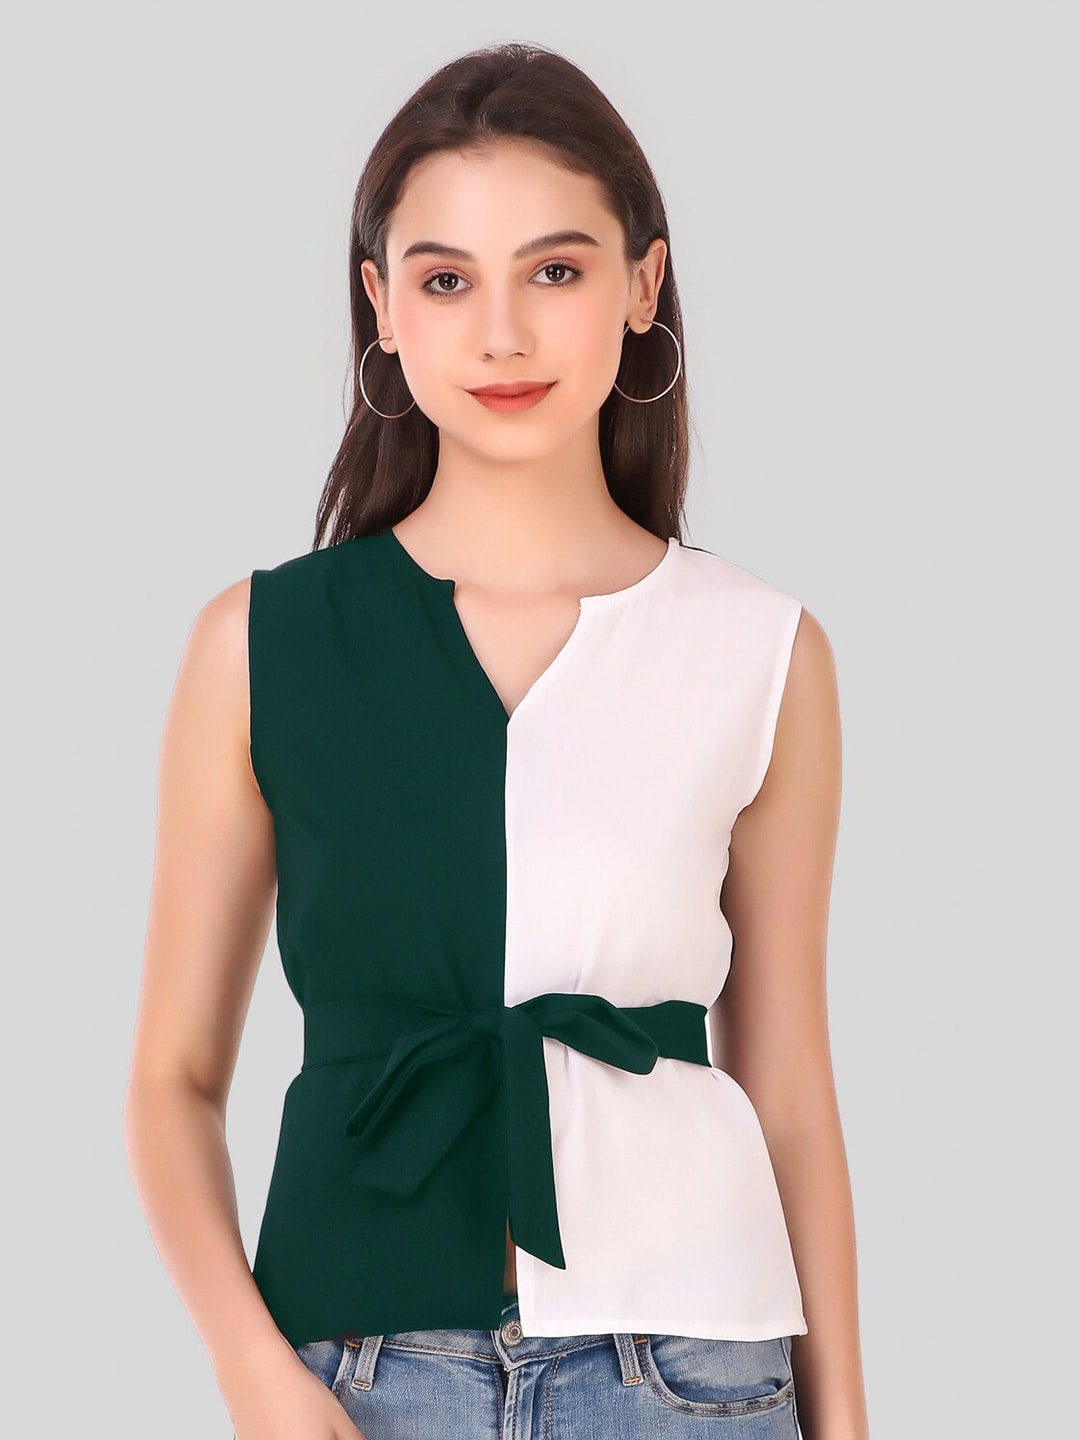 Womenster Green Colourblocked Mandarin Collar Crepe Top Price in India